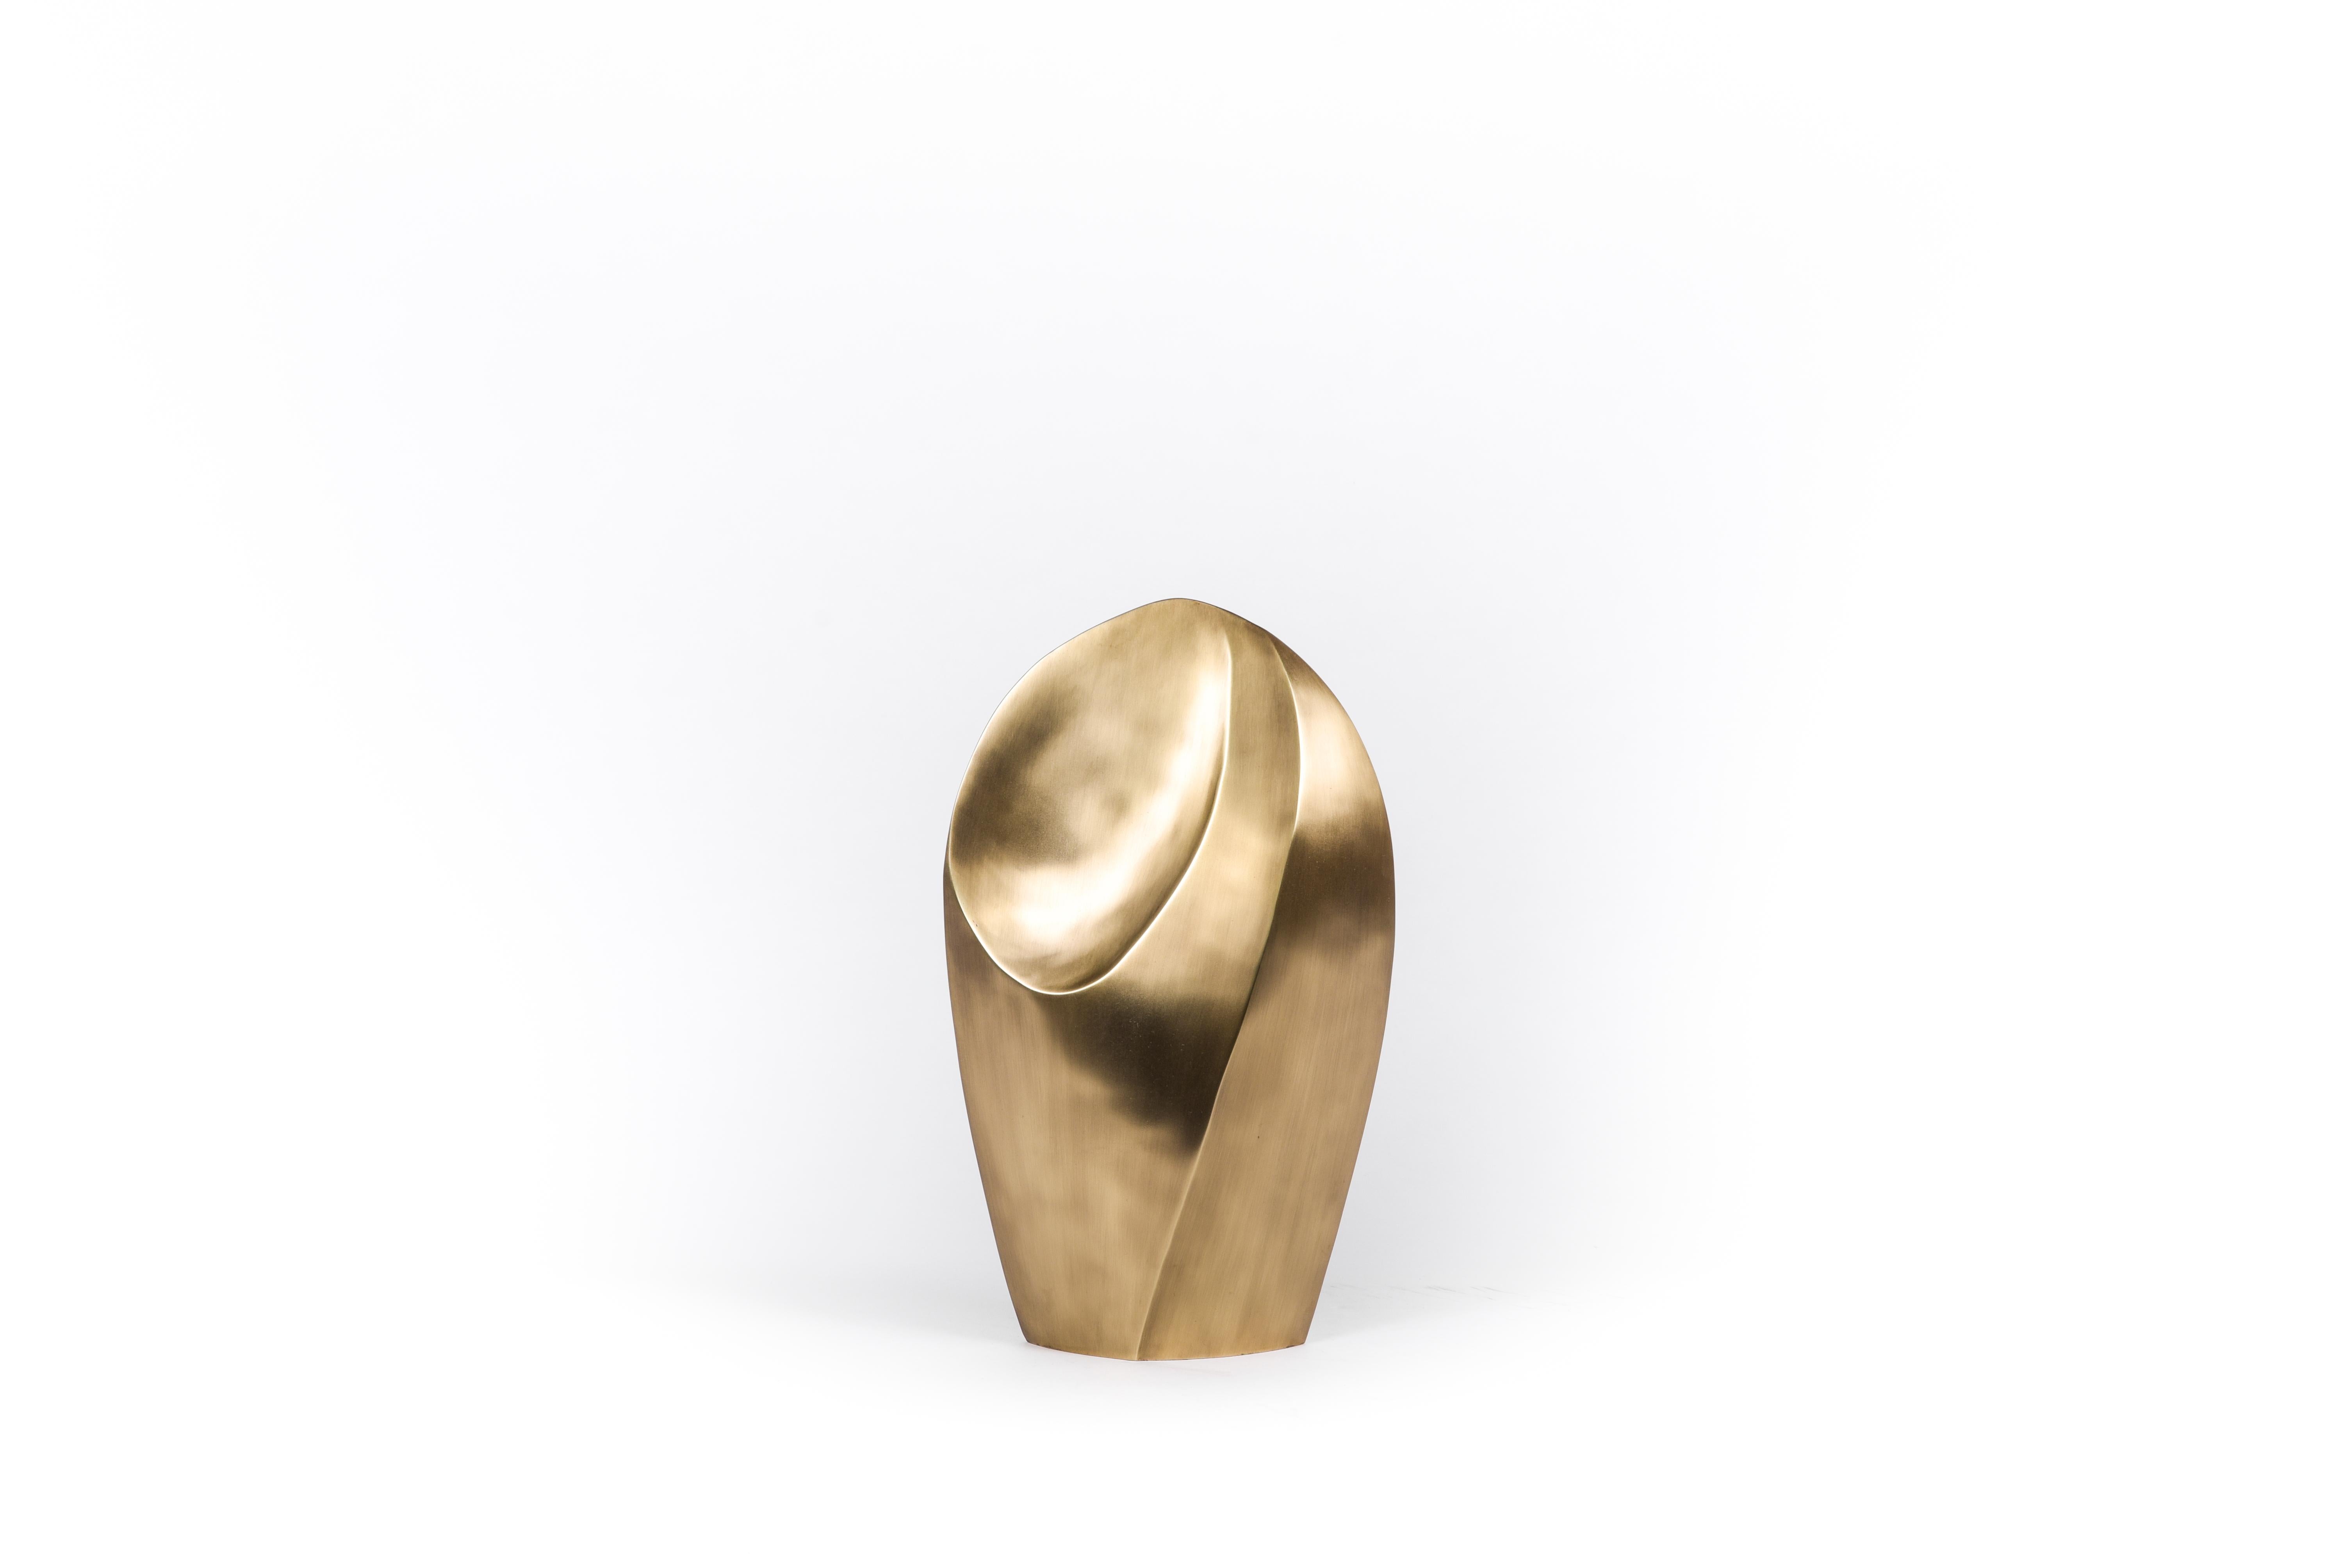 Bronze-Patina Brass Sculpture by Patrick Coard Paris For Sale 11